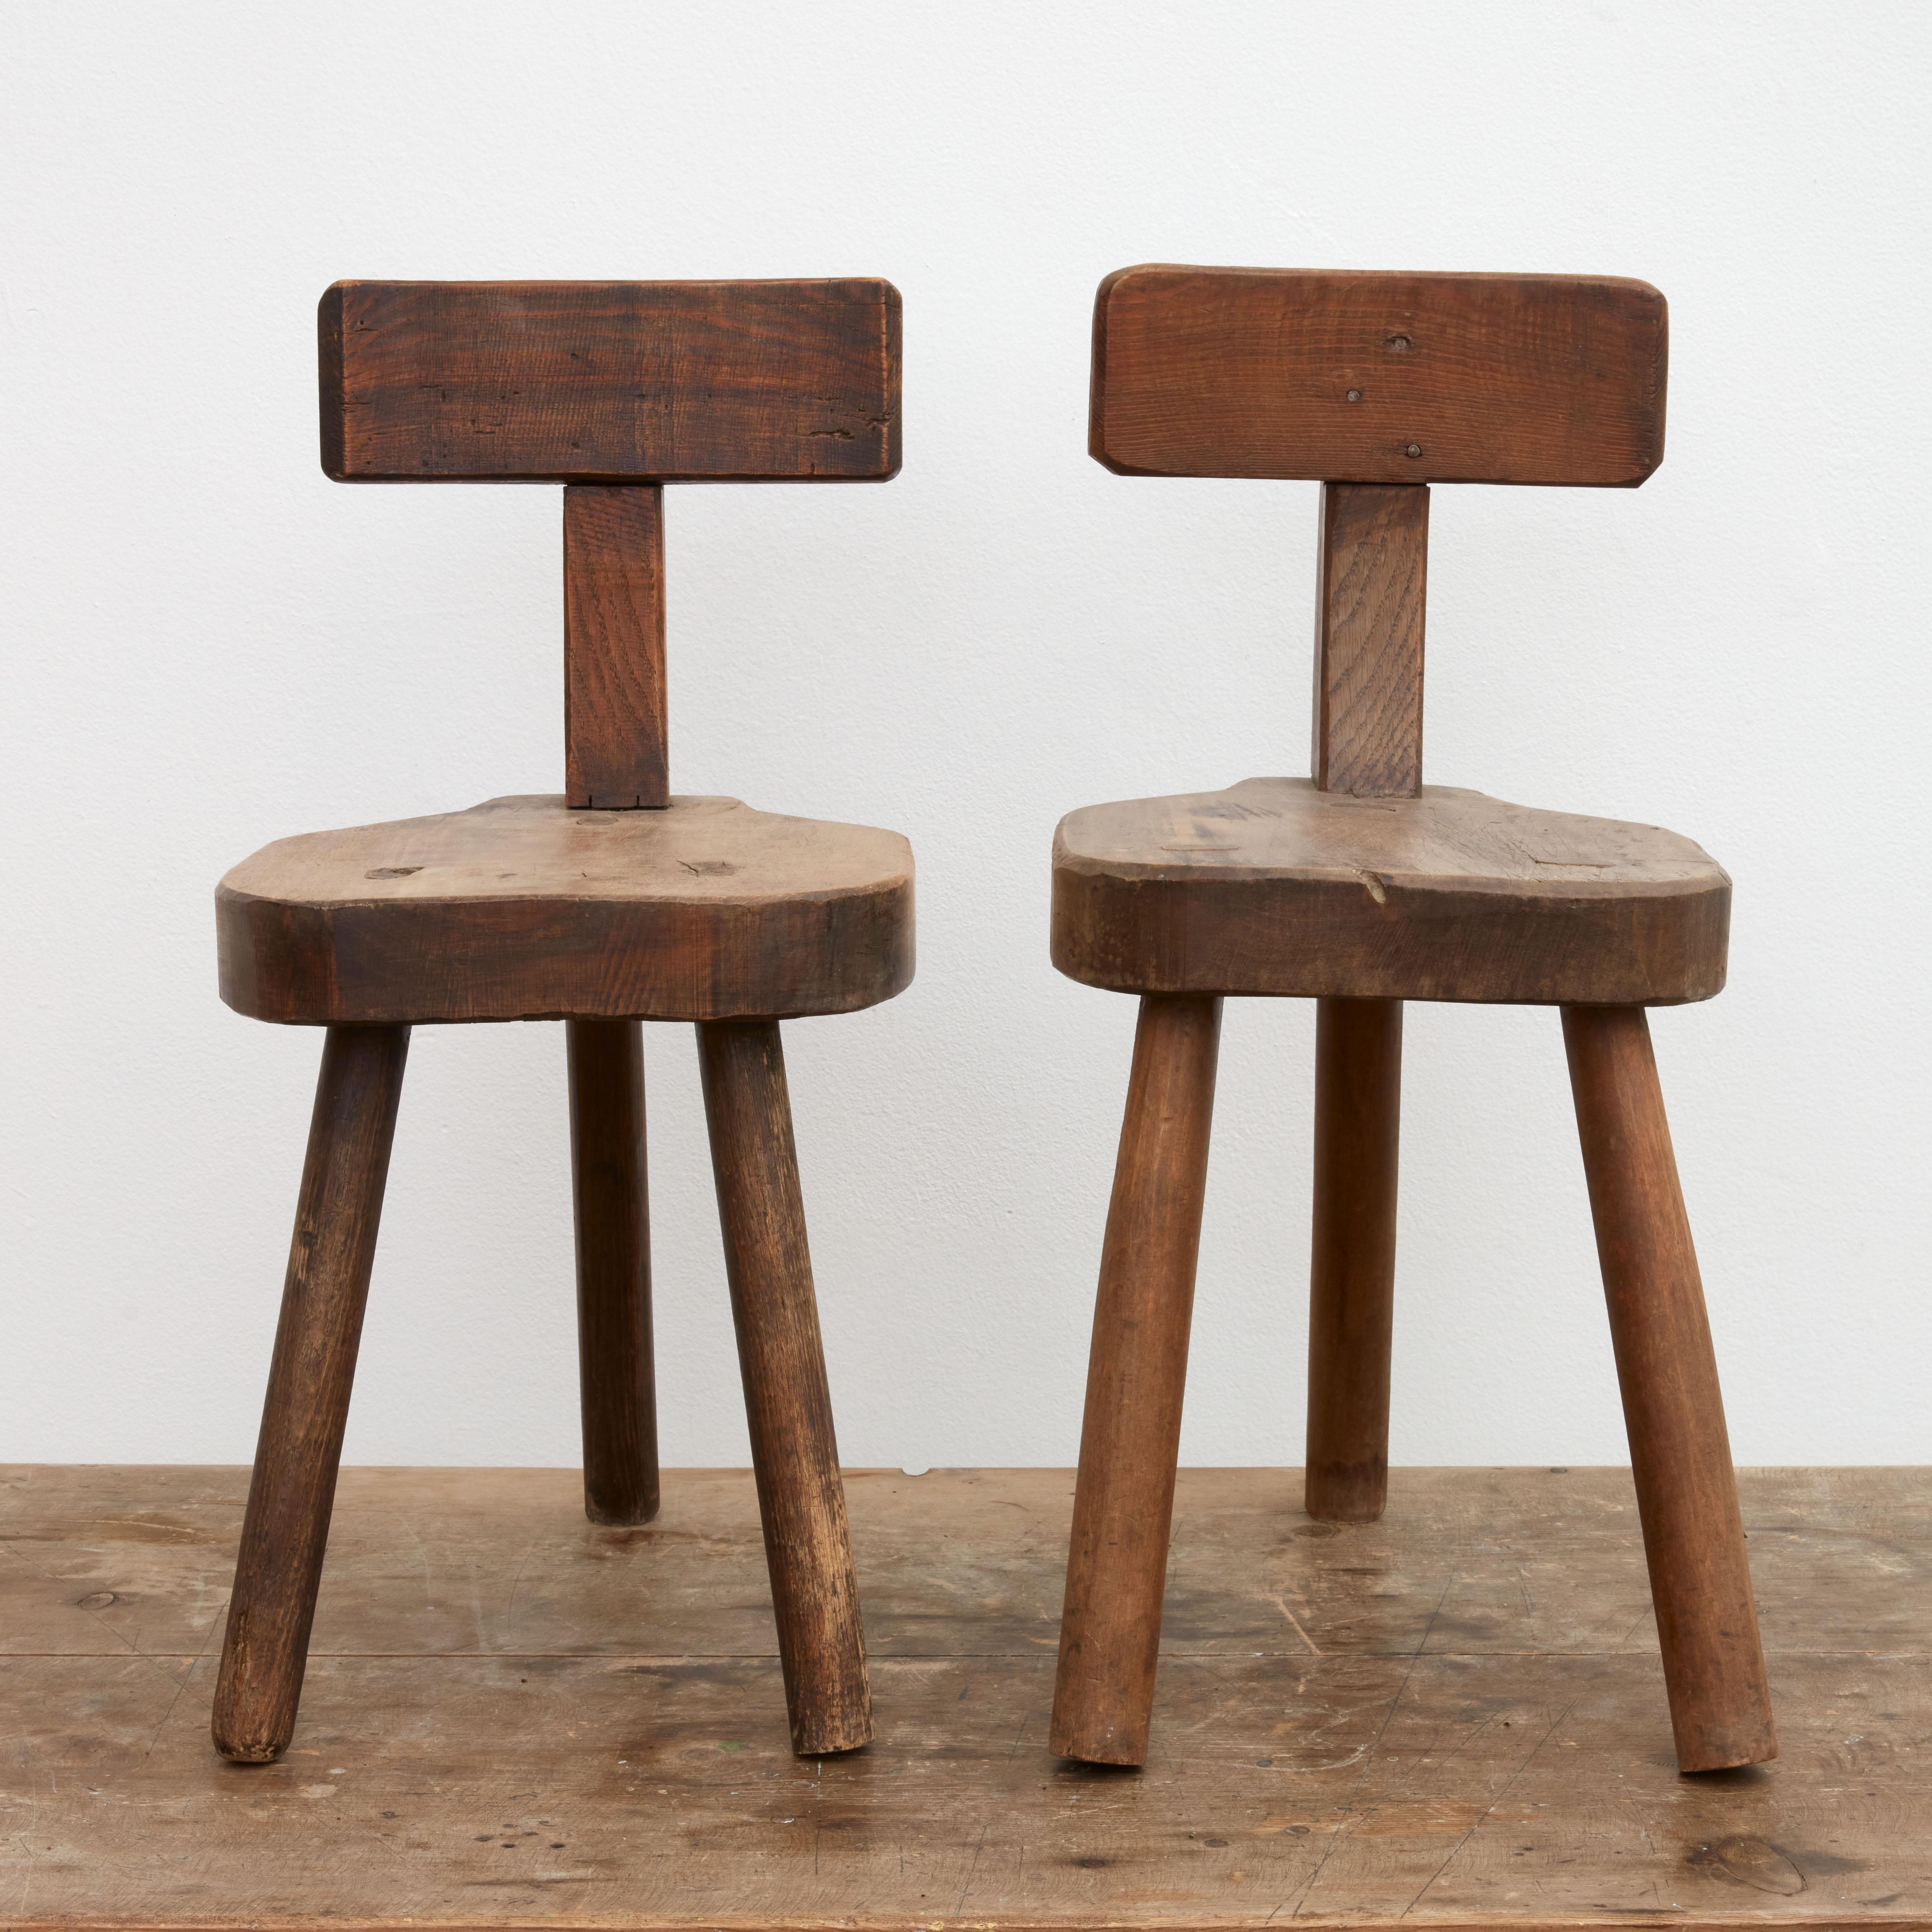 Pair of primitive three-legged miniature milking chairs.